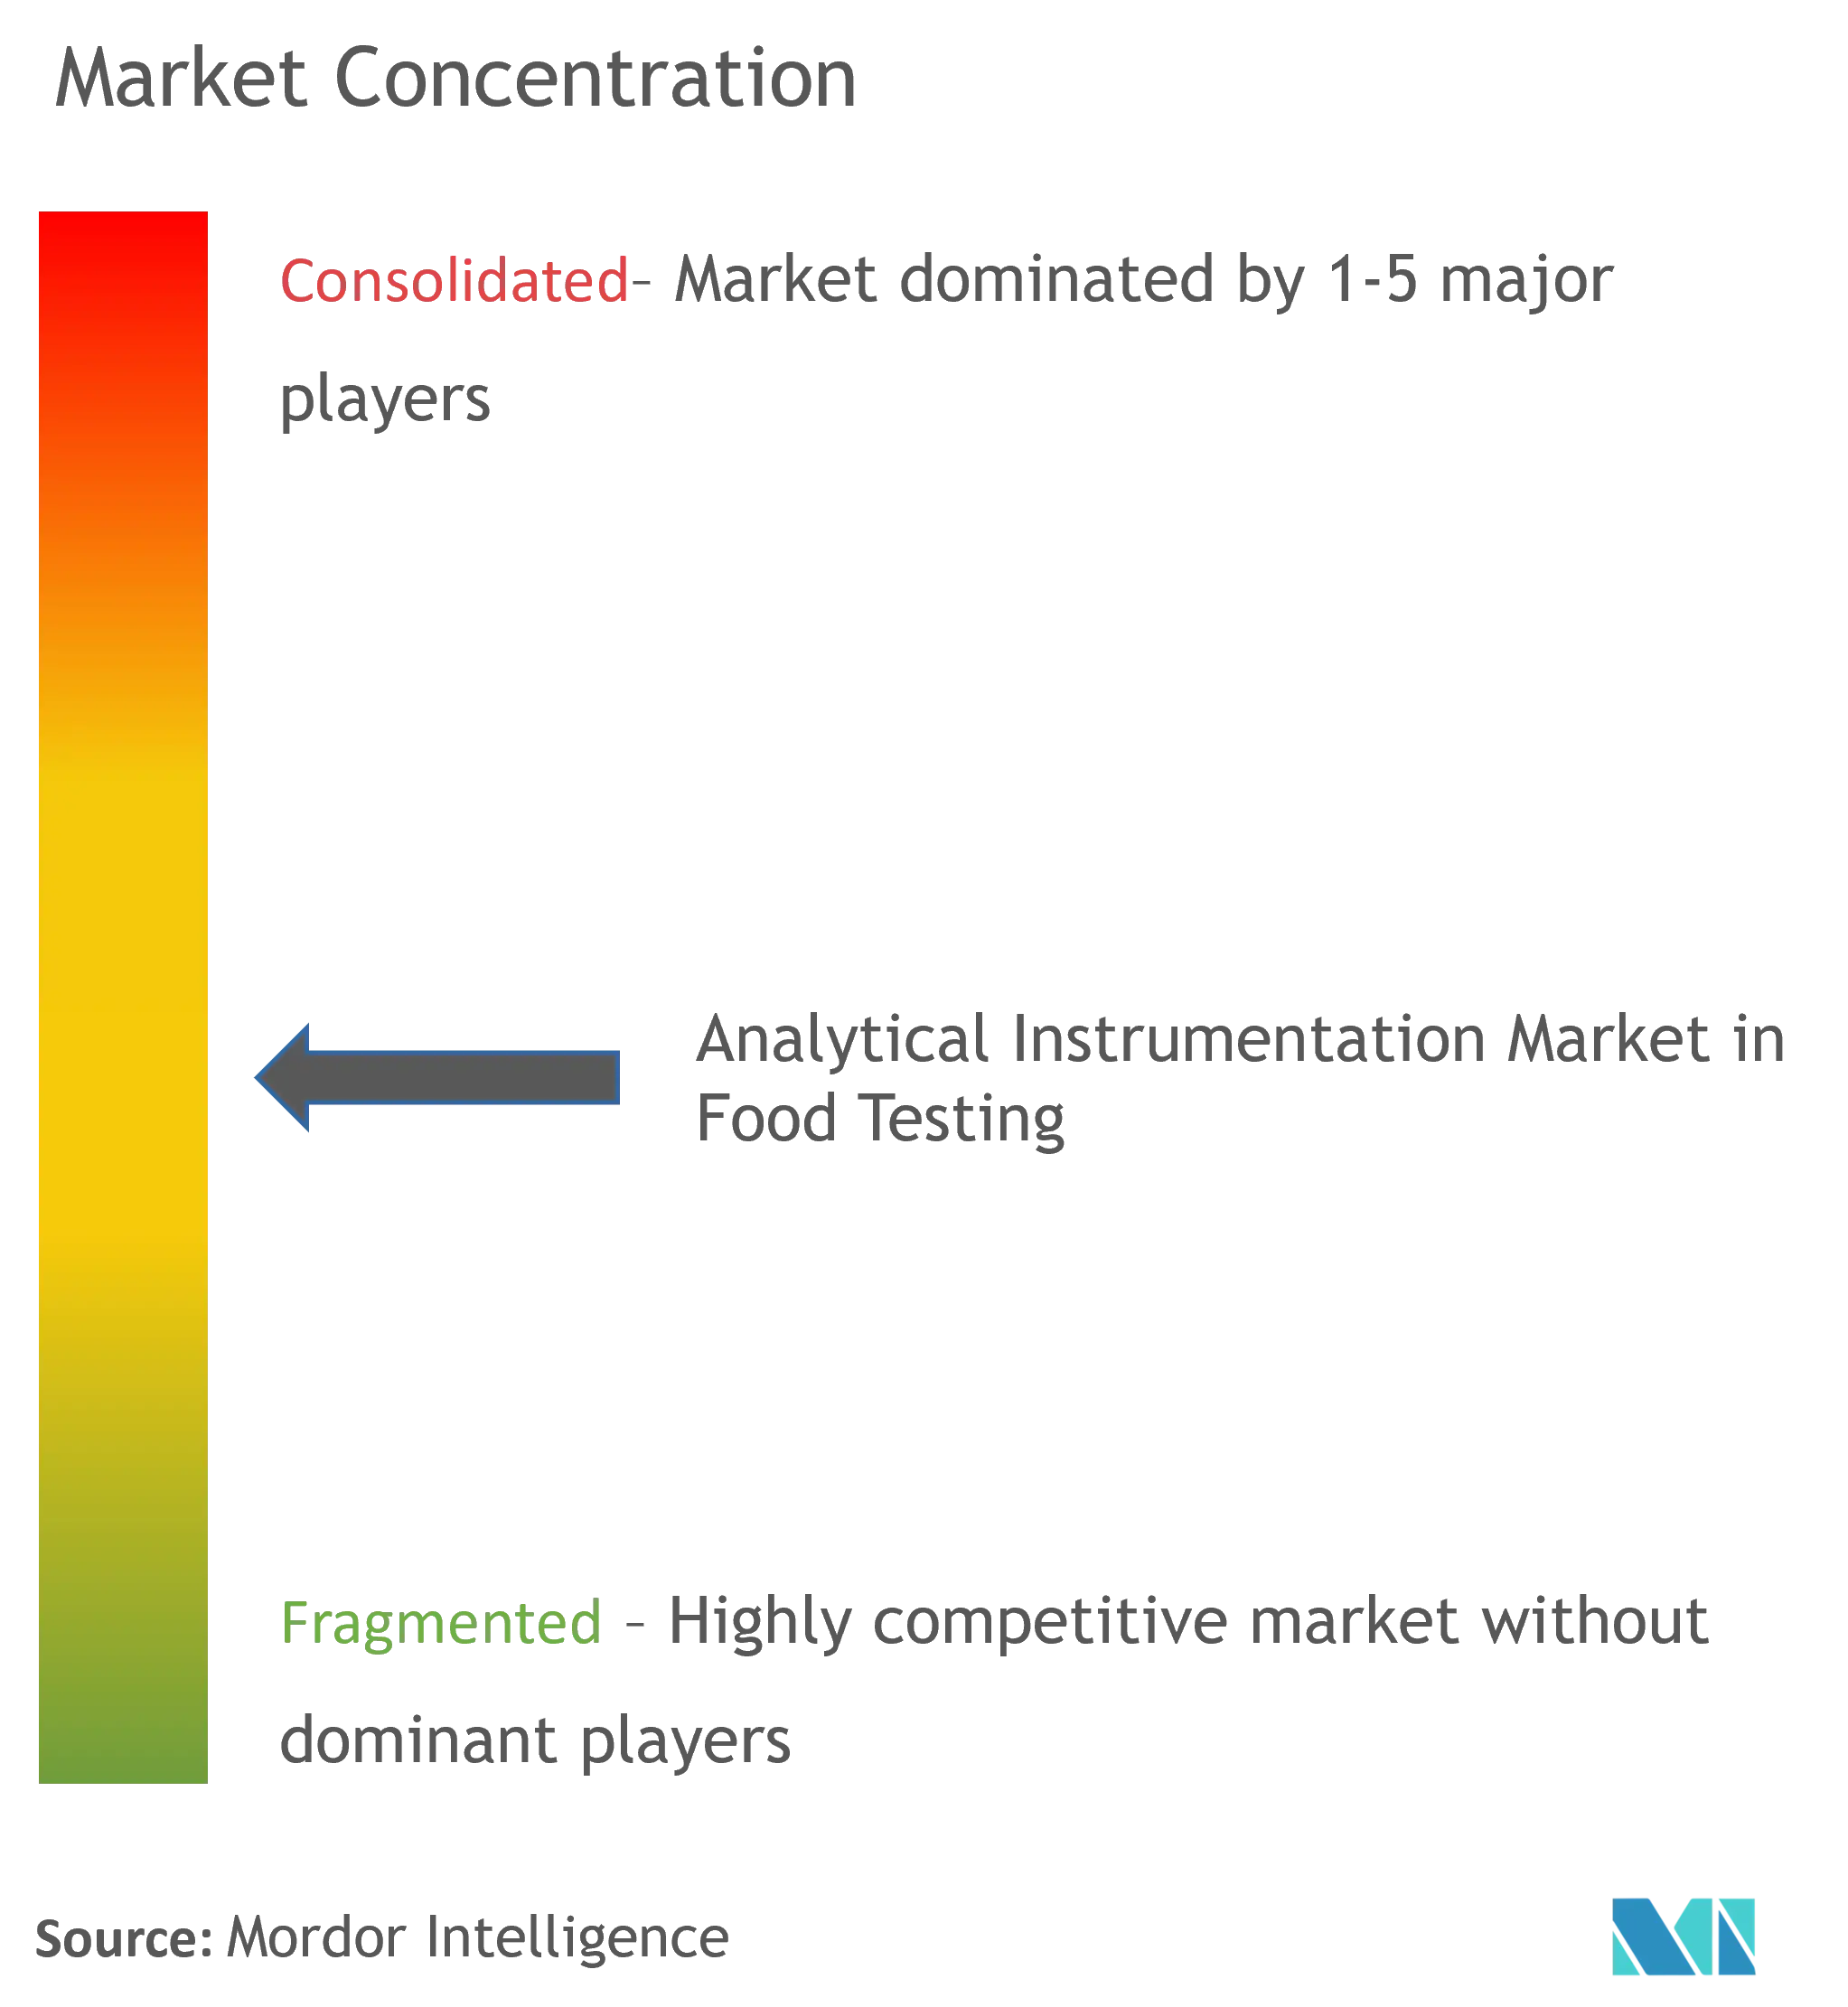 Analytical Instrumentation Market Concentration